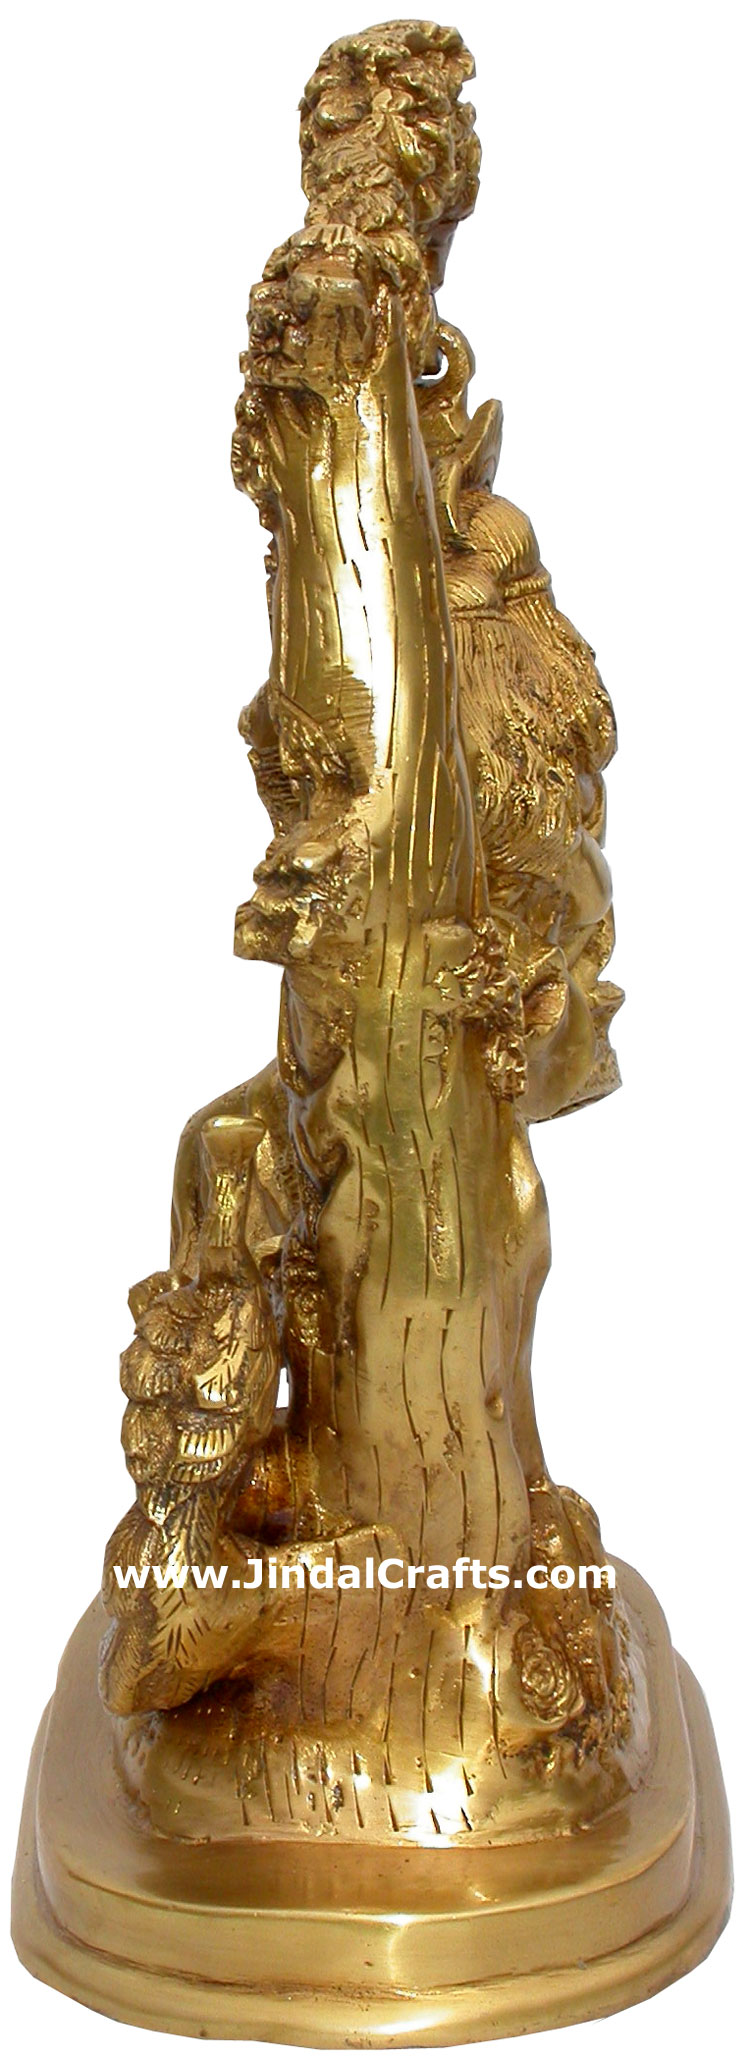 Radha Krishna Swing Sculpture Hindu Religious Handicraft Indian Brass Artifacts